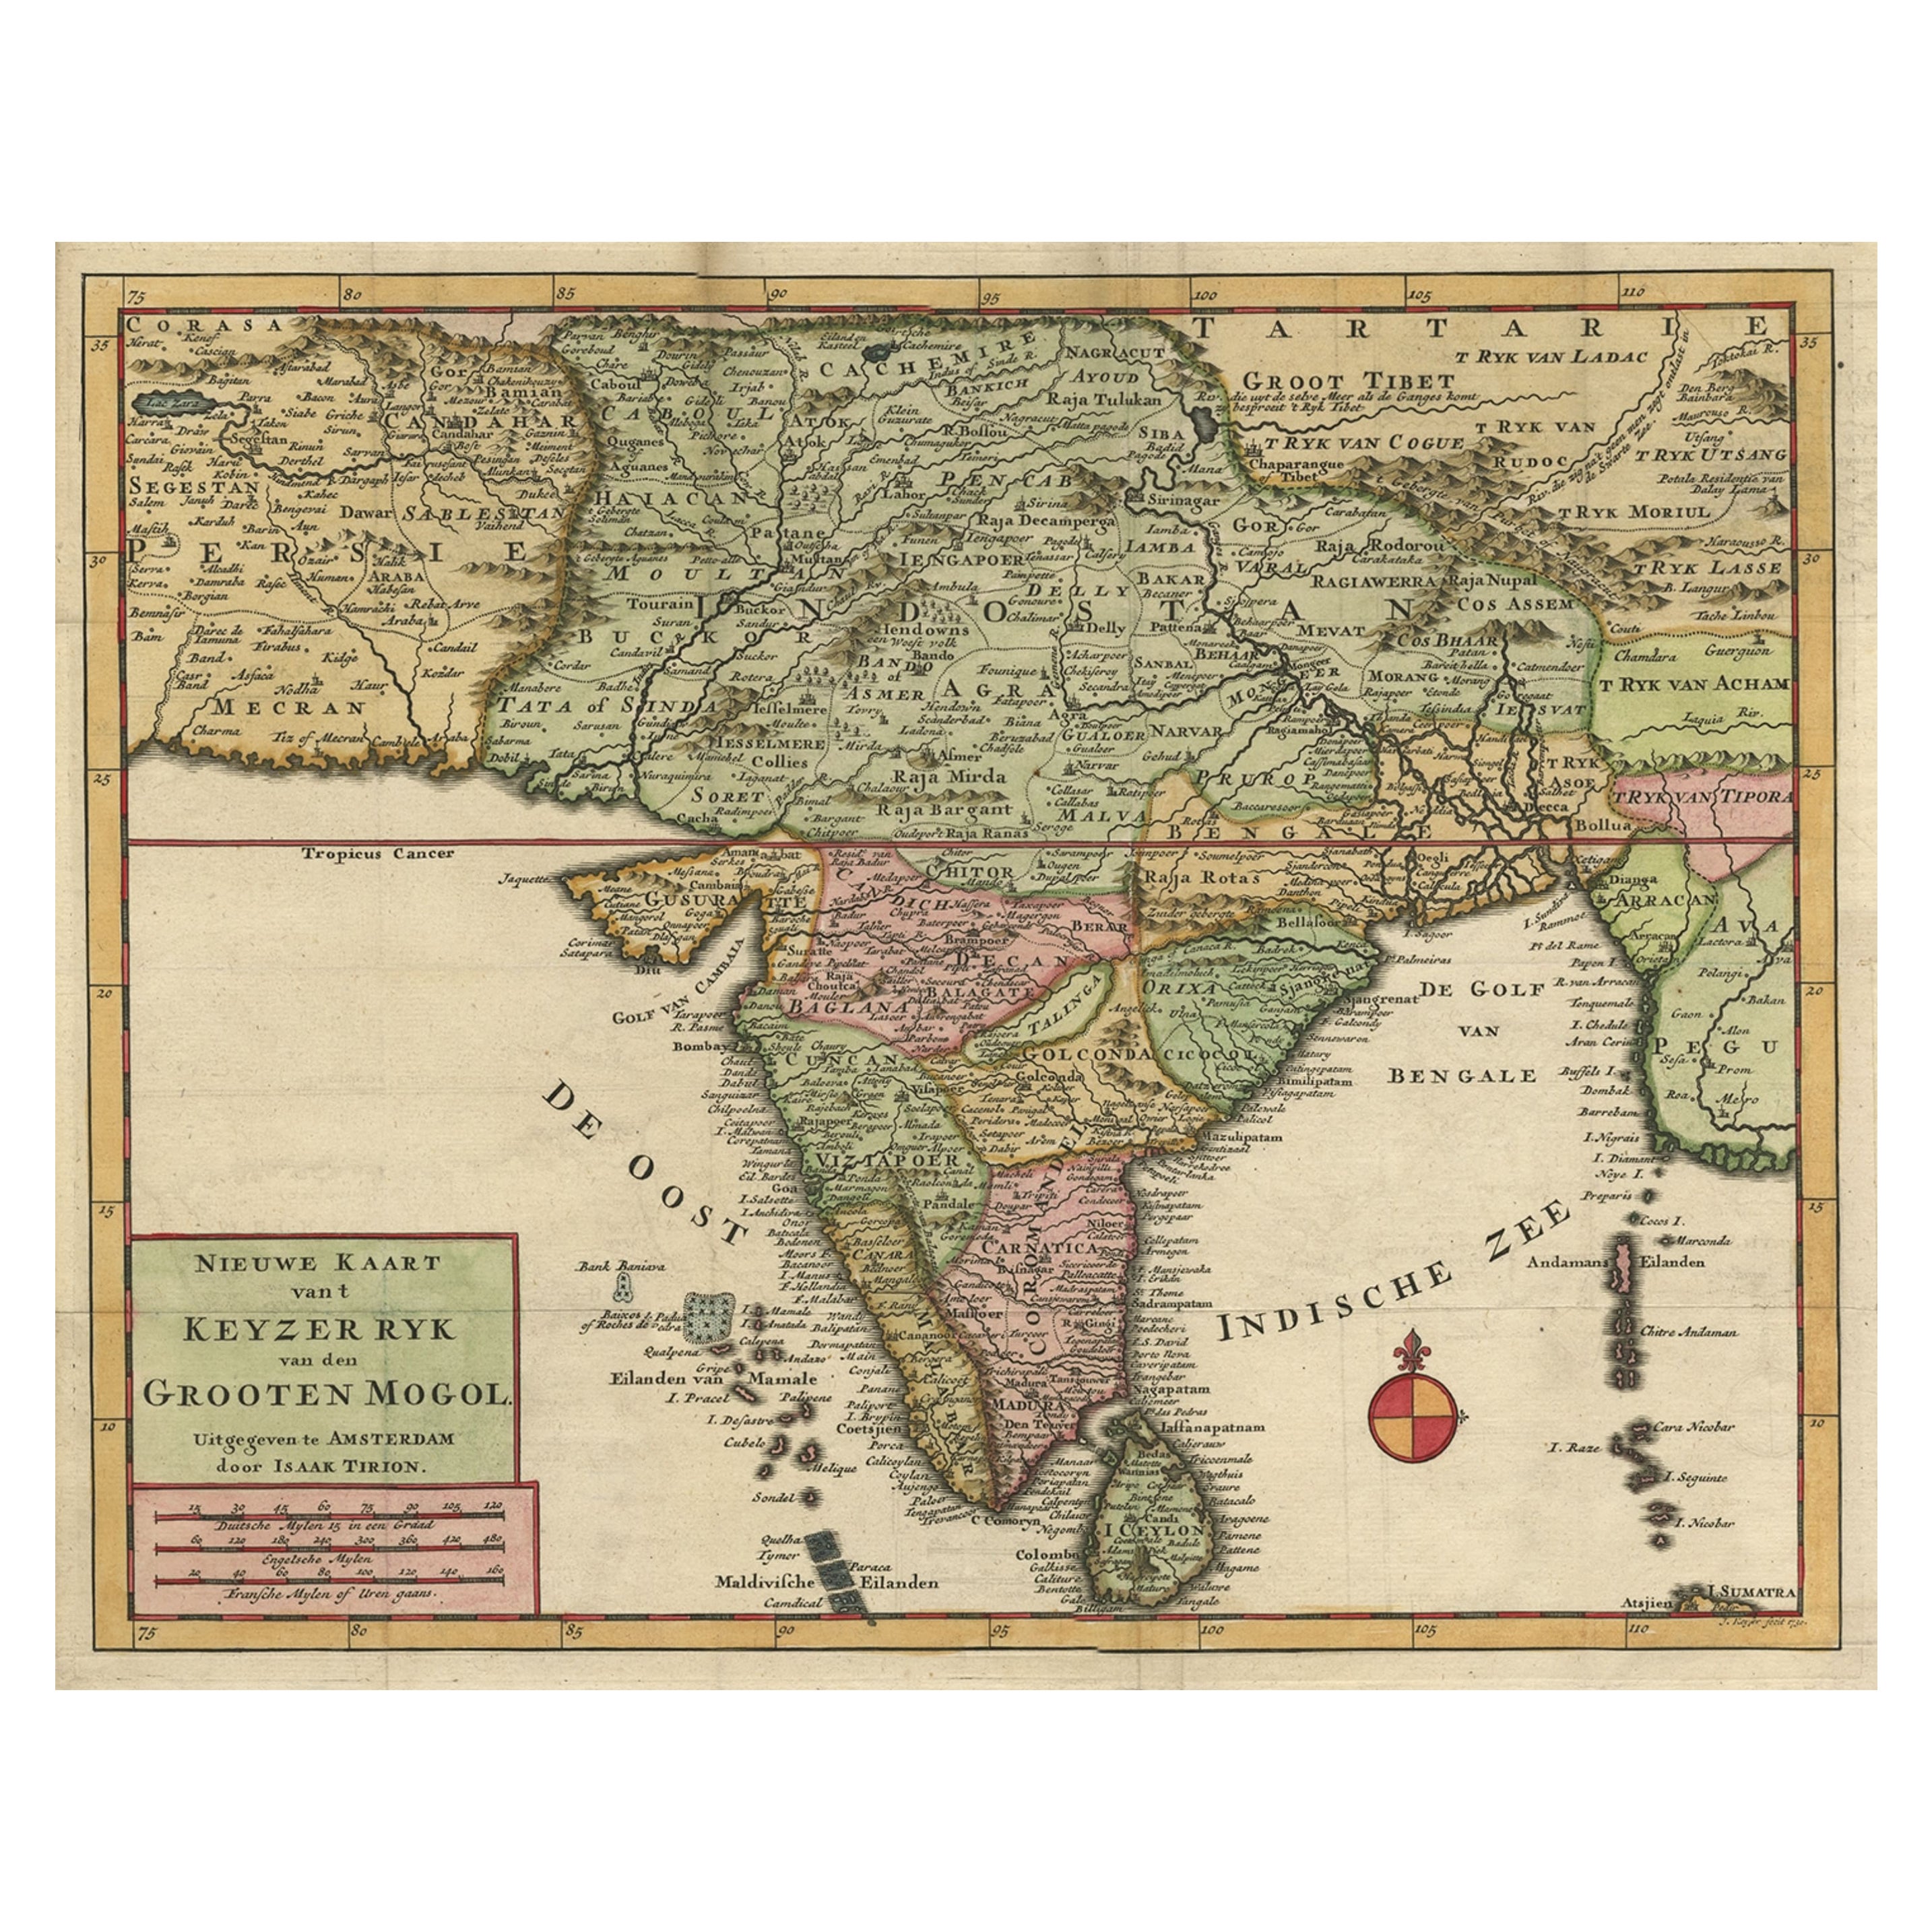 Detaillierte, detaillierte Karte des Empire of the Great Mogul, Incl India, 1731